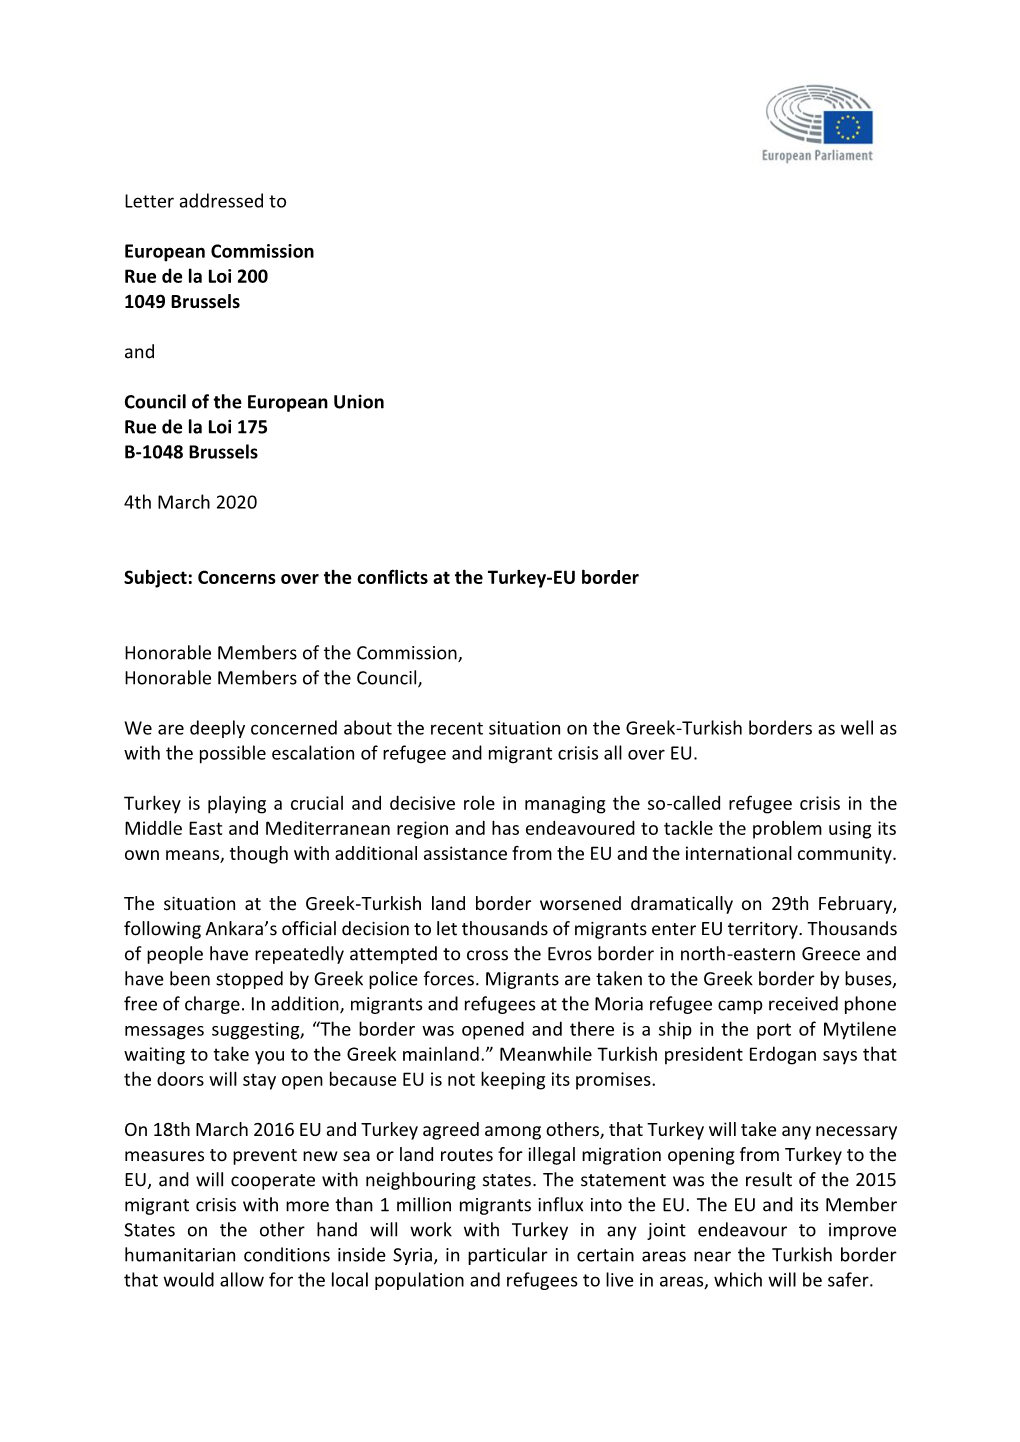 Letter Addressed to European Commission Rue De La Loi 200